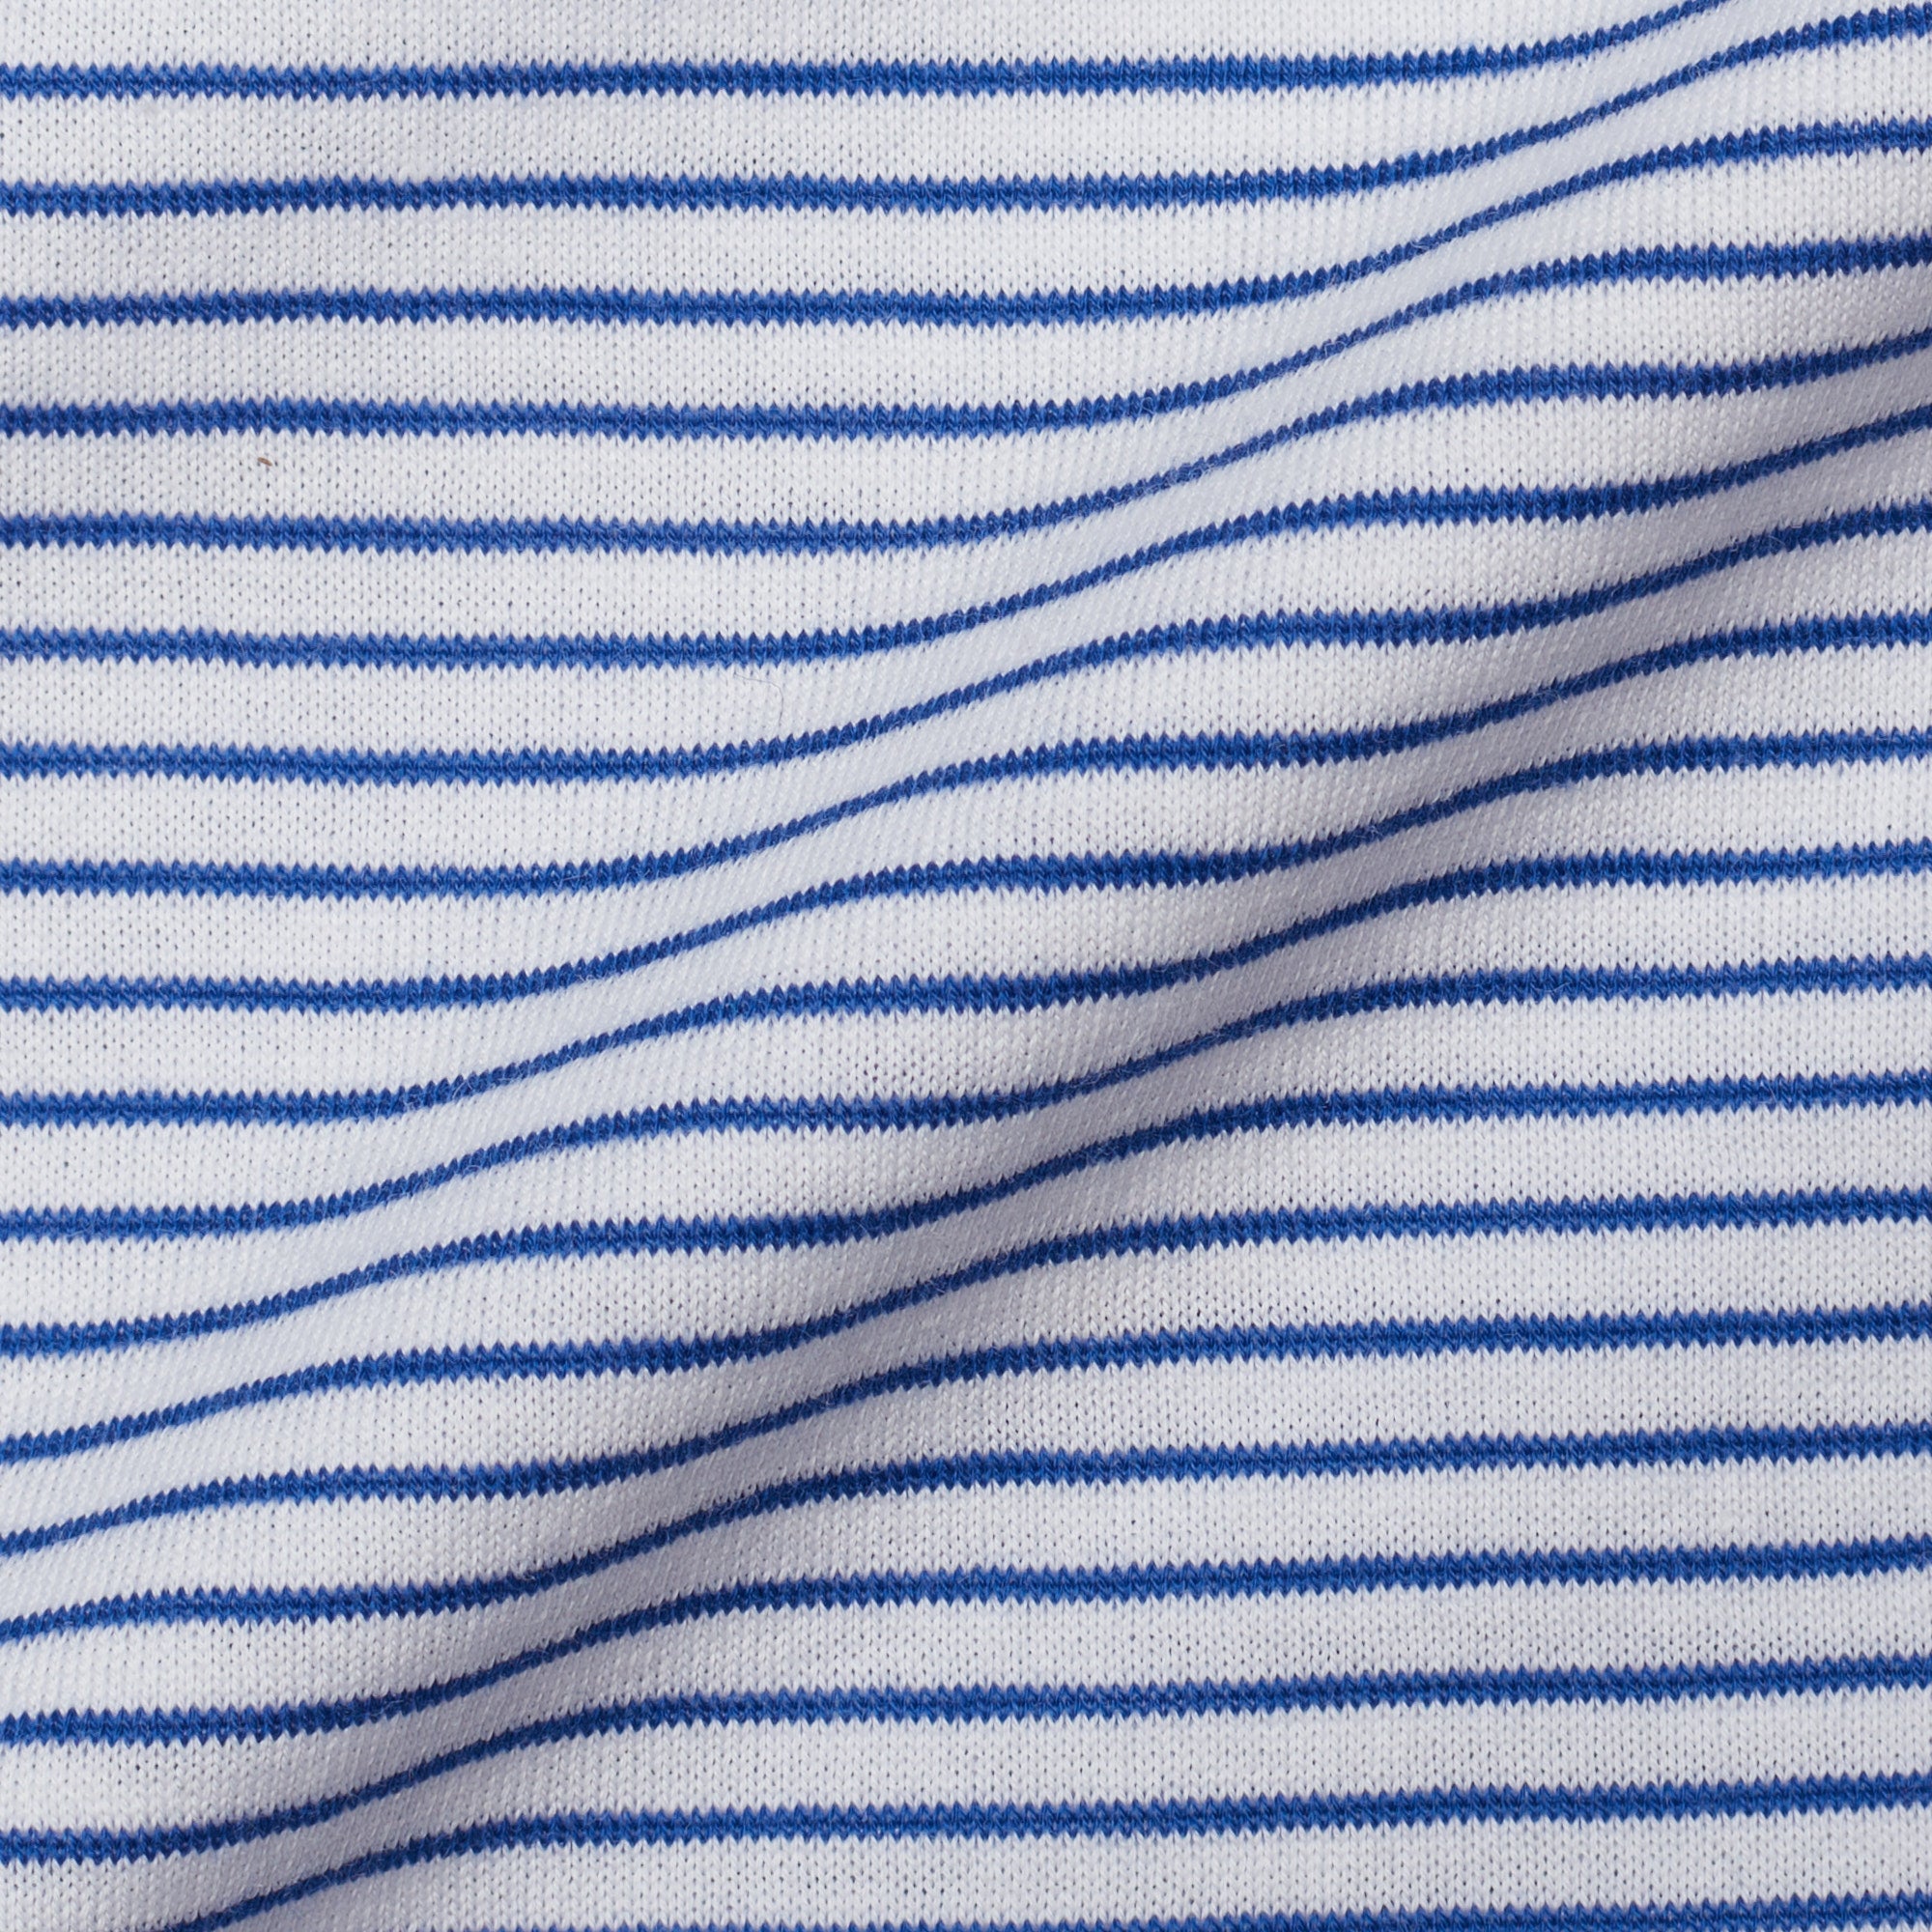 FEDELI "Libeccio" Blue Striped Cotton Jersey Long Sleeve Polo Shirt EU 60 NEW US 4XL FEDELI